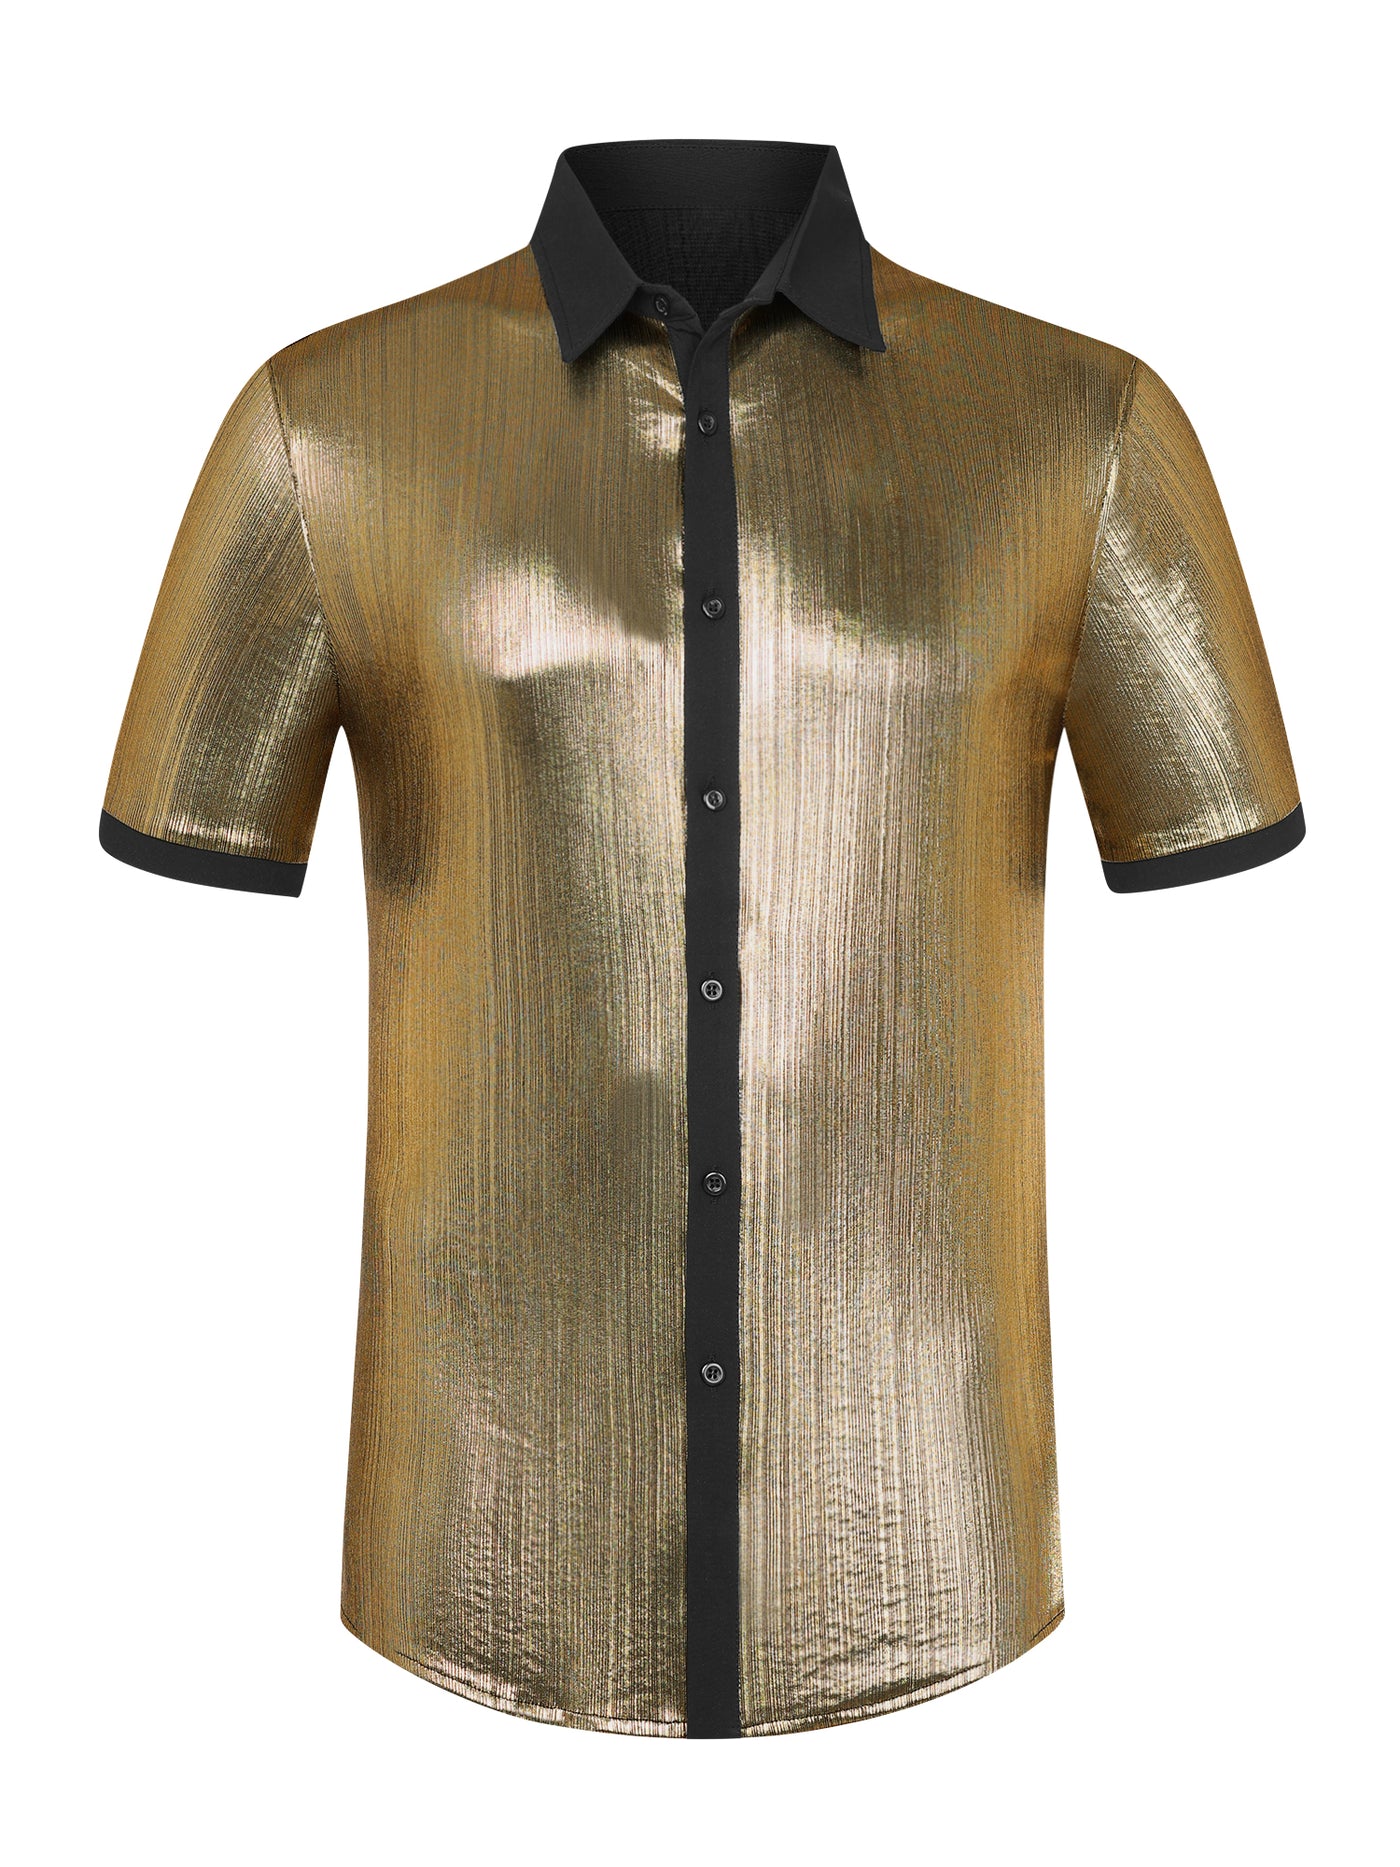 Bublédon Disco Metallic Shirt for Men's Short Sleeves Button Down Nightclub Party Shiny Shirts